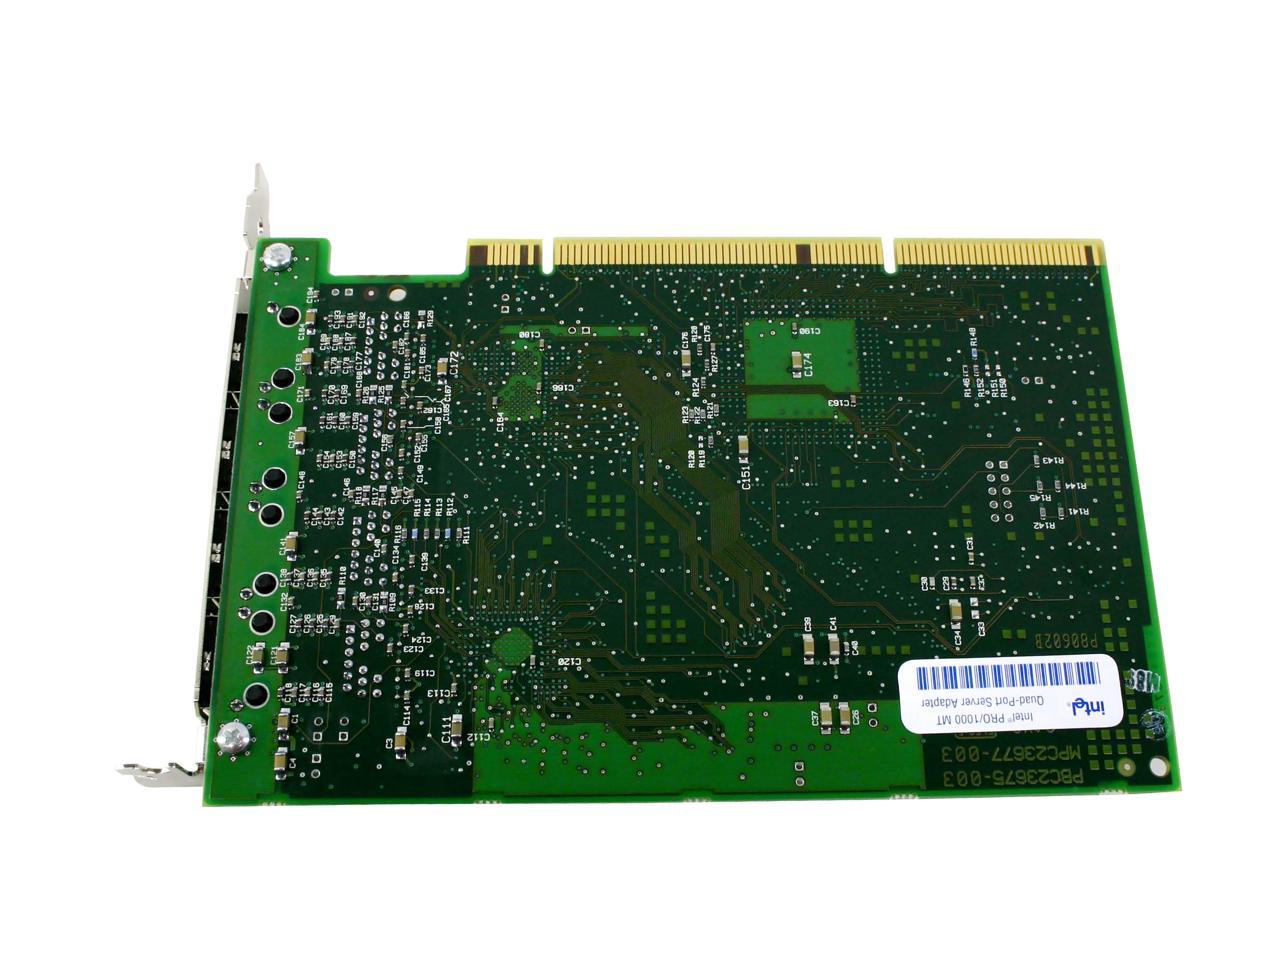 Intel PWLA8494MT PRO/1000 MT Quad Port Server Adapter 10/100/1000Mbps PCI 4  x RJ45 - OEM